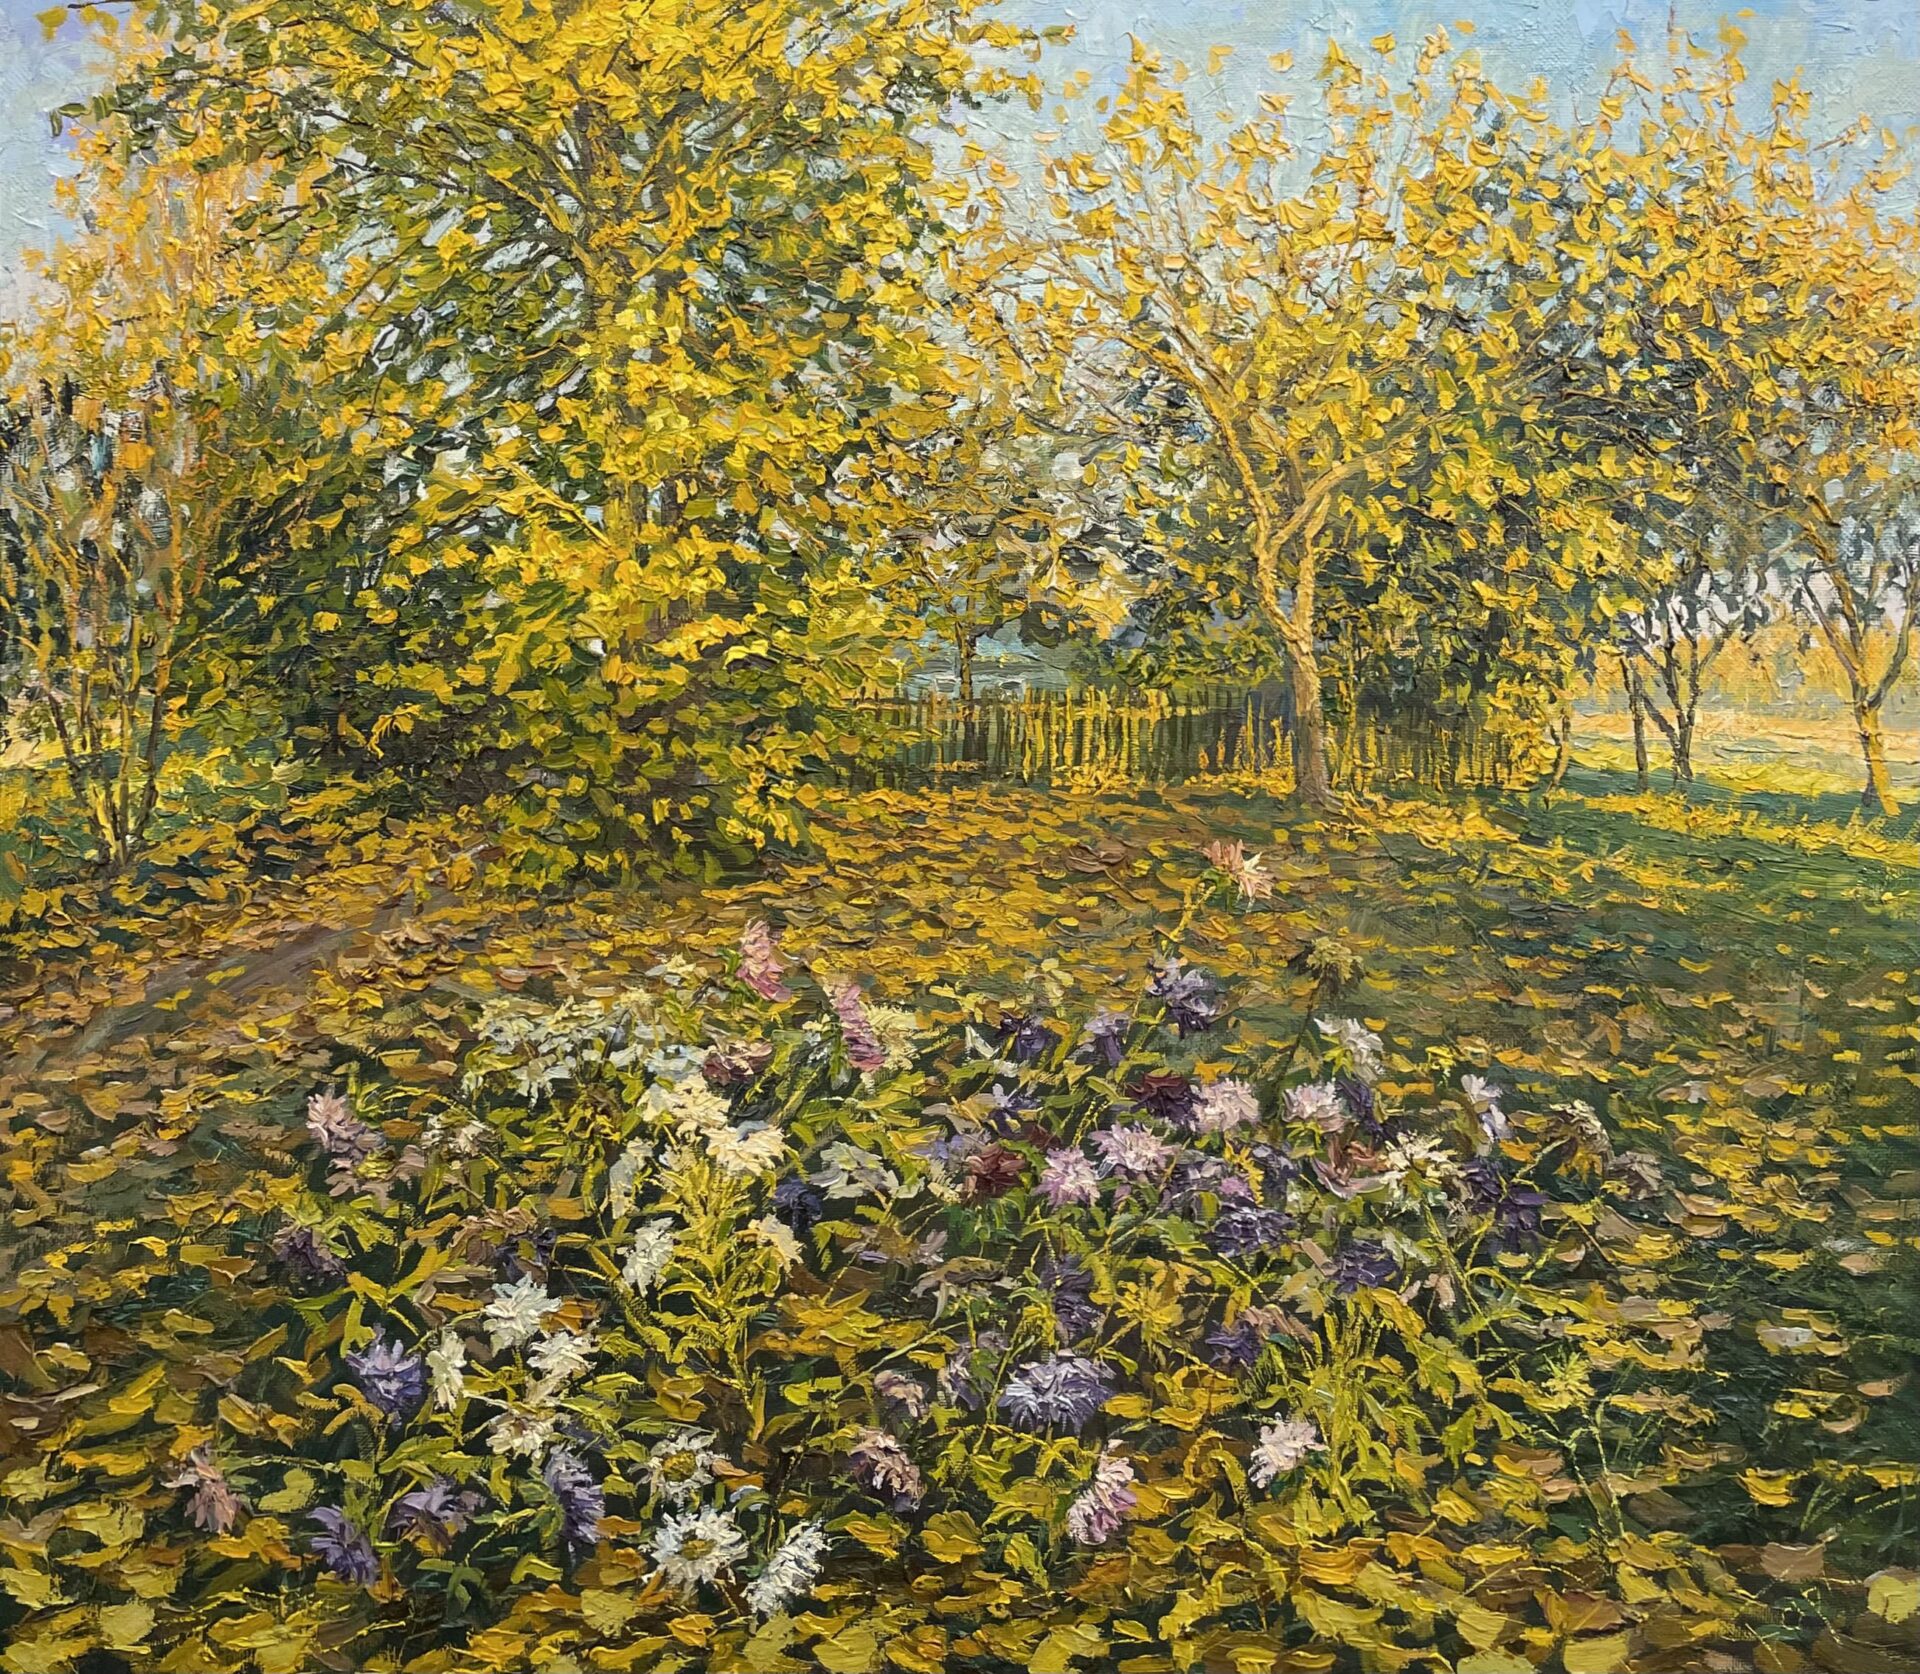 "Осенние цветы" - Бархаткова Елена, 2005 г.